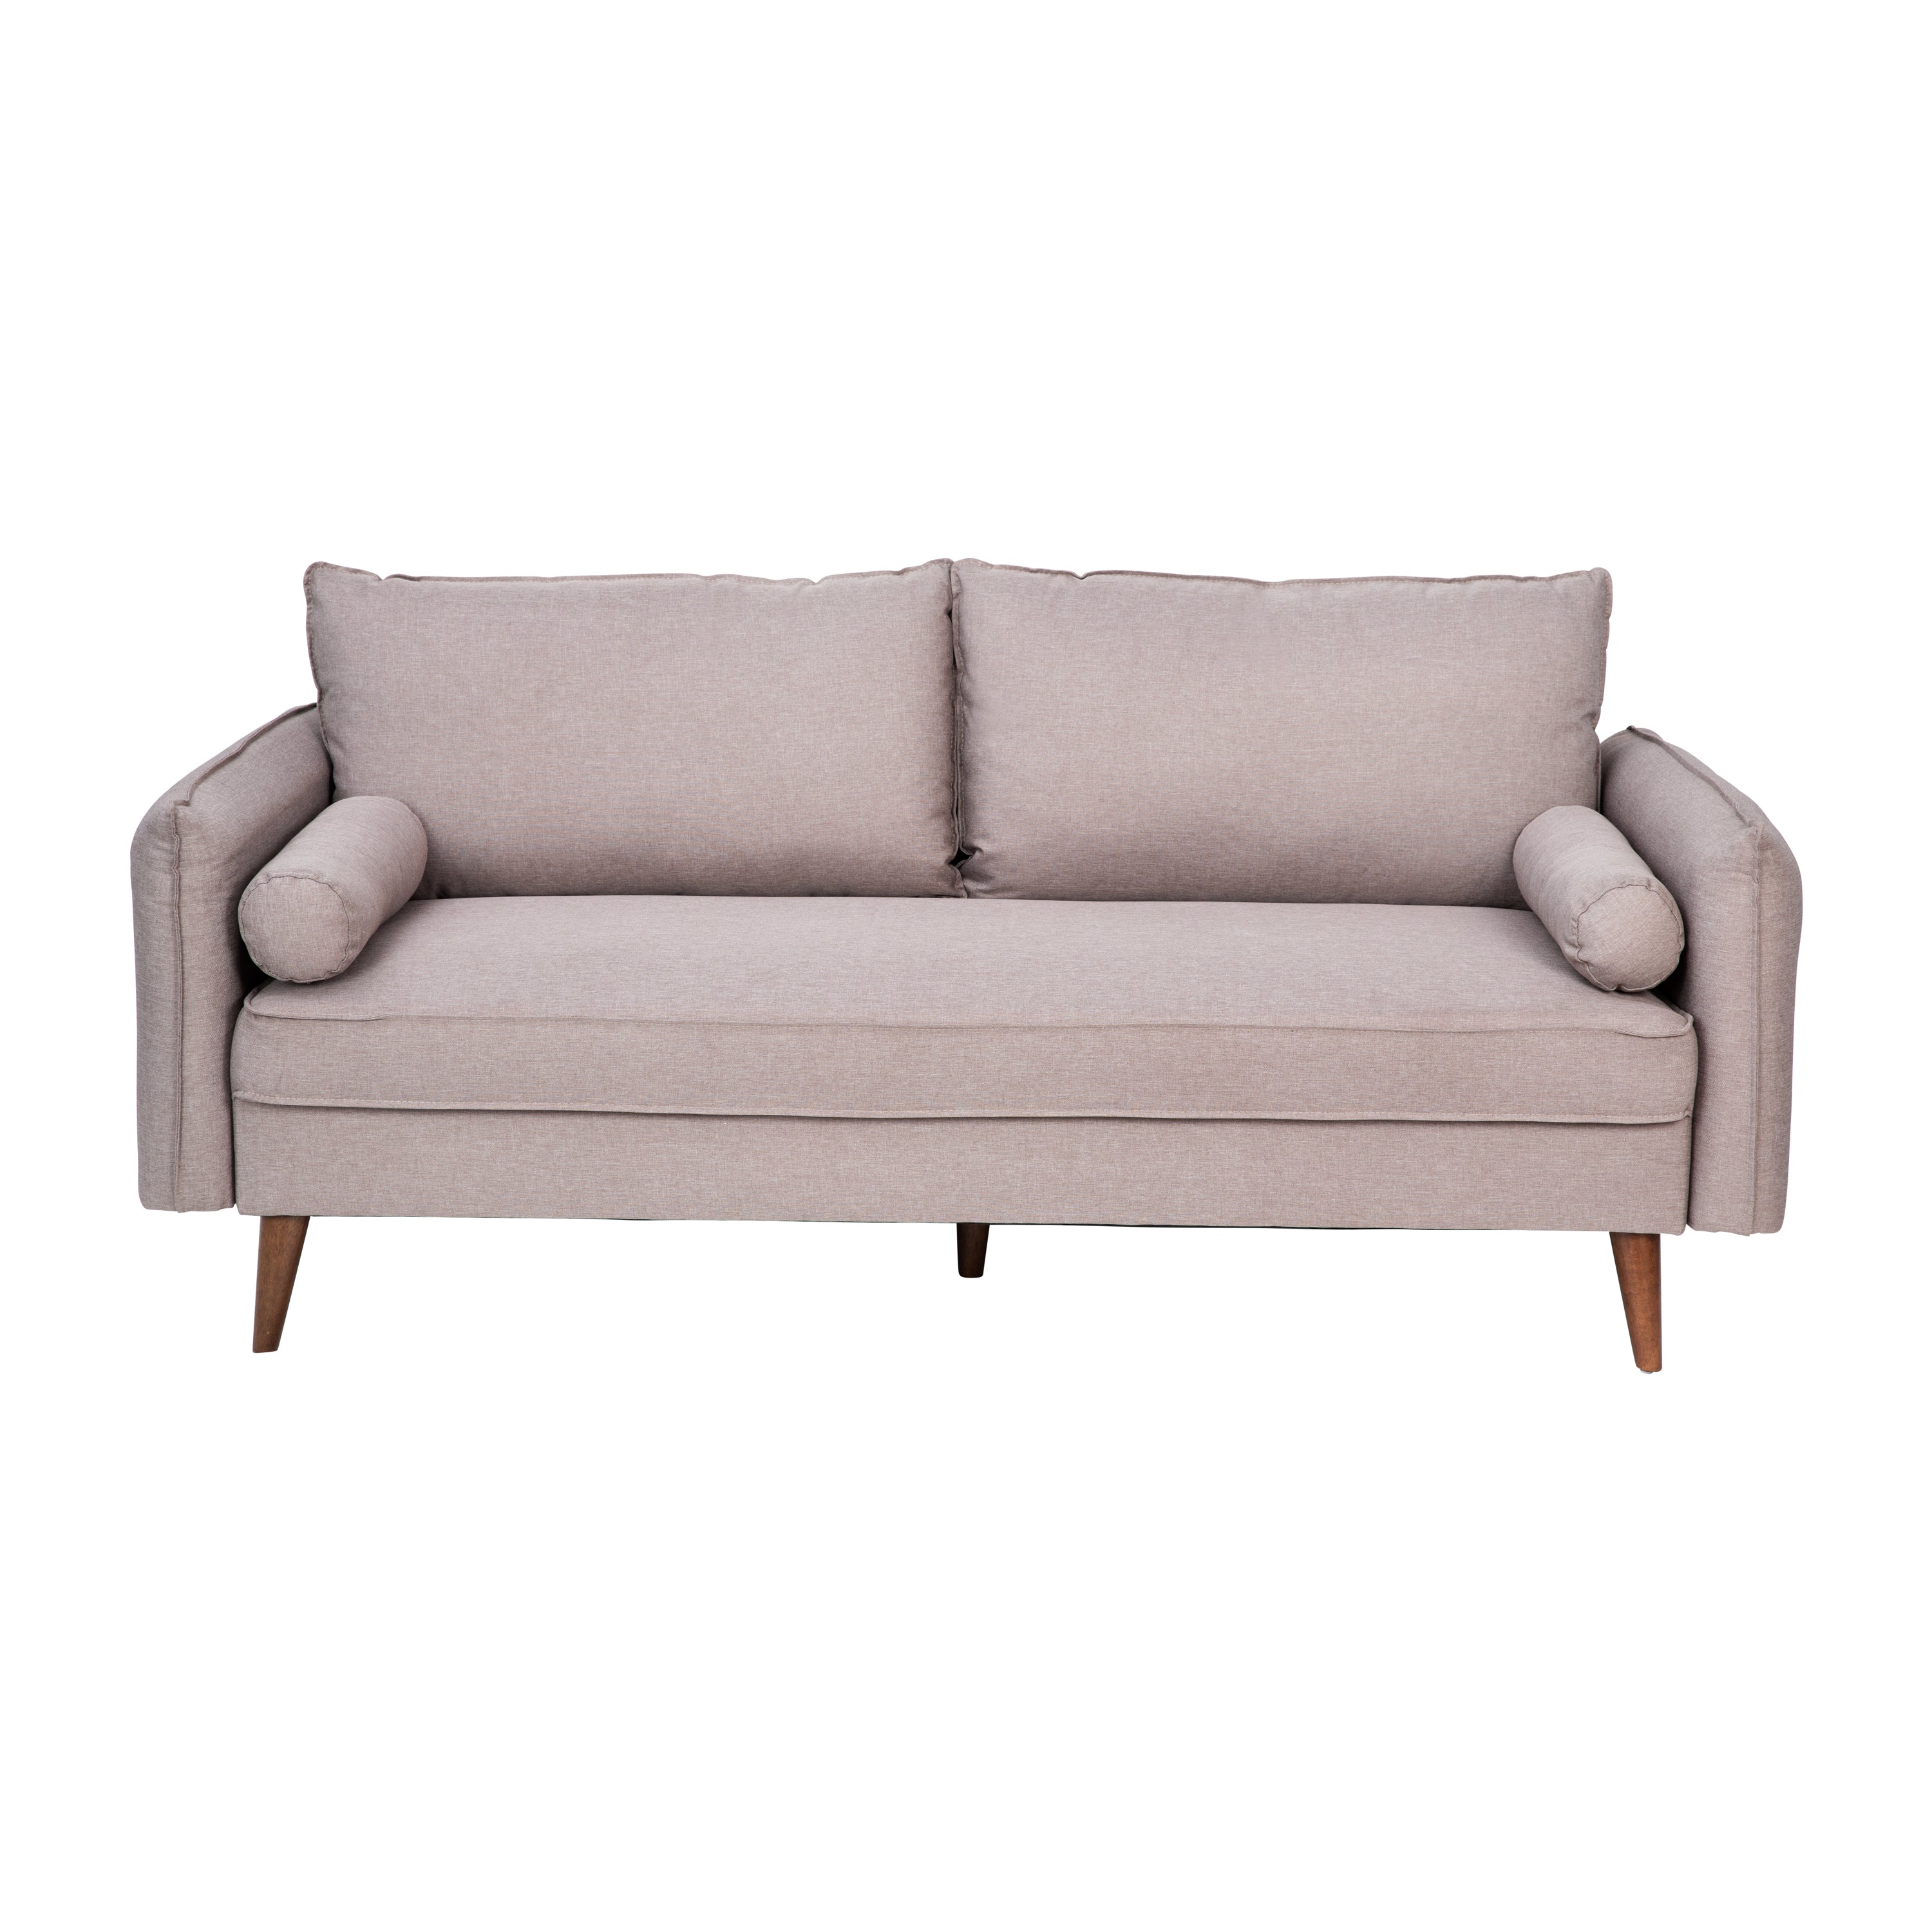 Evie Mid-Century Modern Sofa with Fabric Upholstery & Solid Wood Legs-Sofa-Flash Furniture-Wall2Wall Furnishings